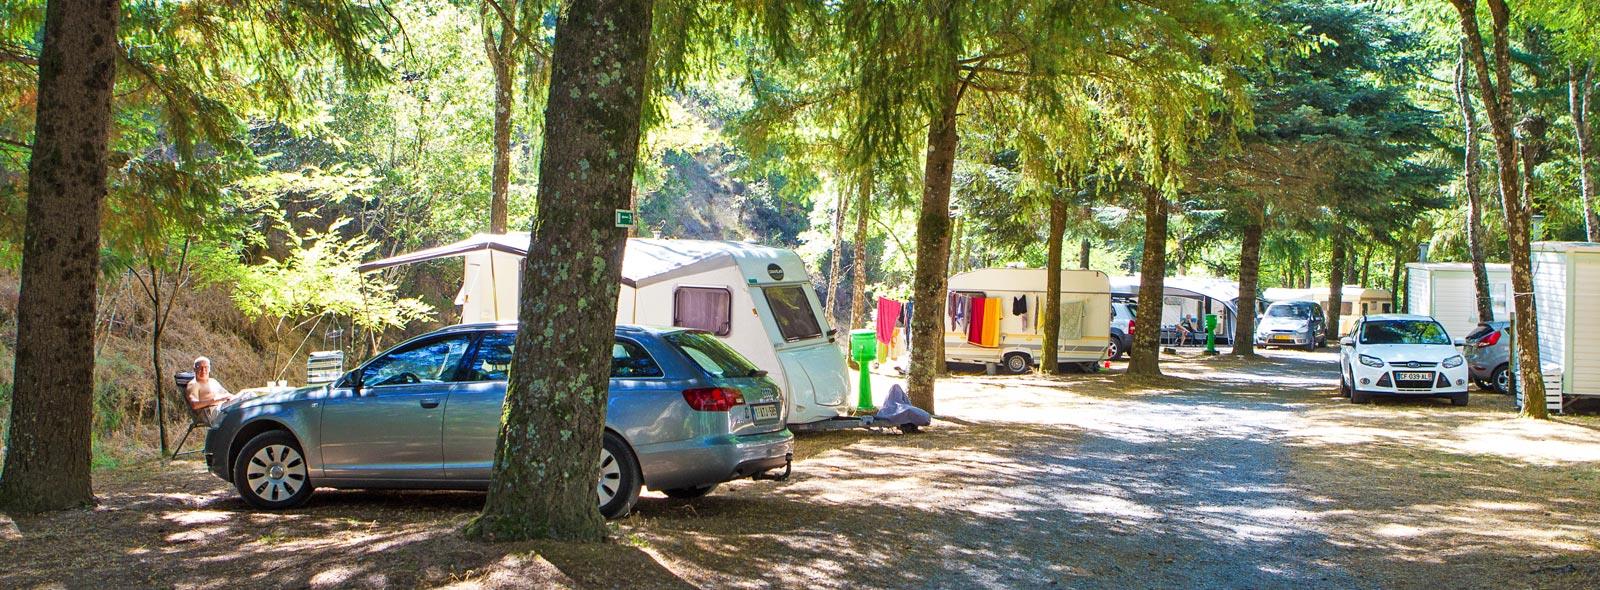 Kampeerplaats - Standplaats + Auto - Camping Le Roubreau